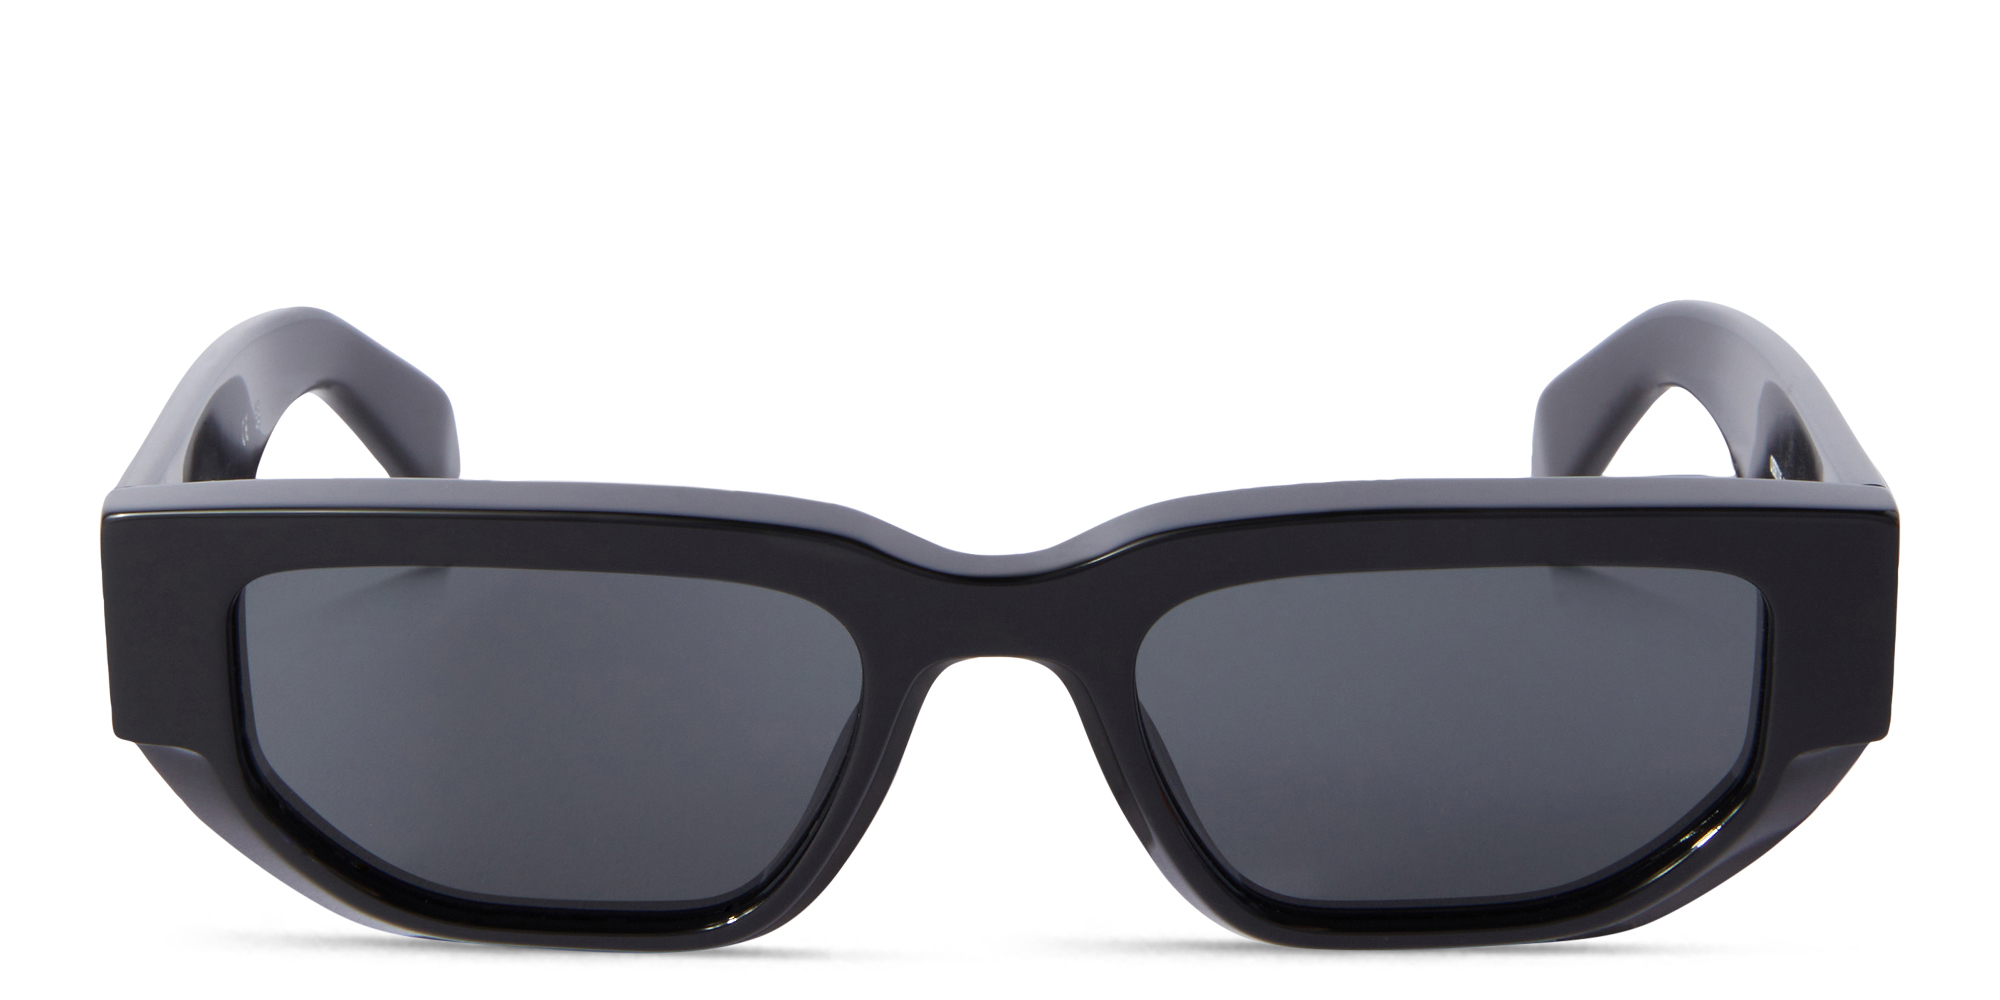 

Greeley Unisex Rectangle Sunglasses, Black